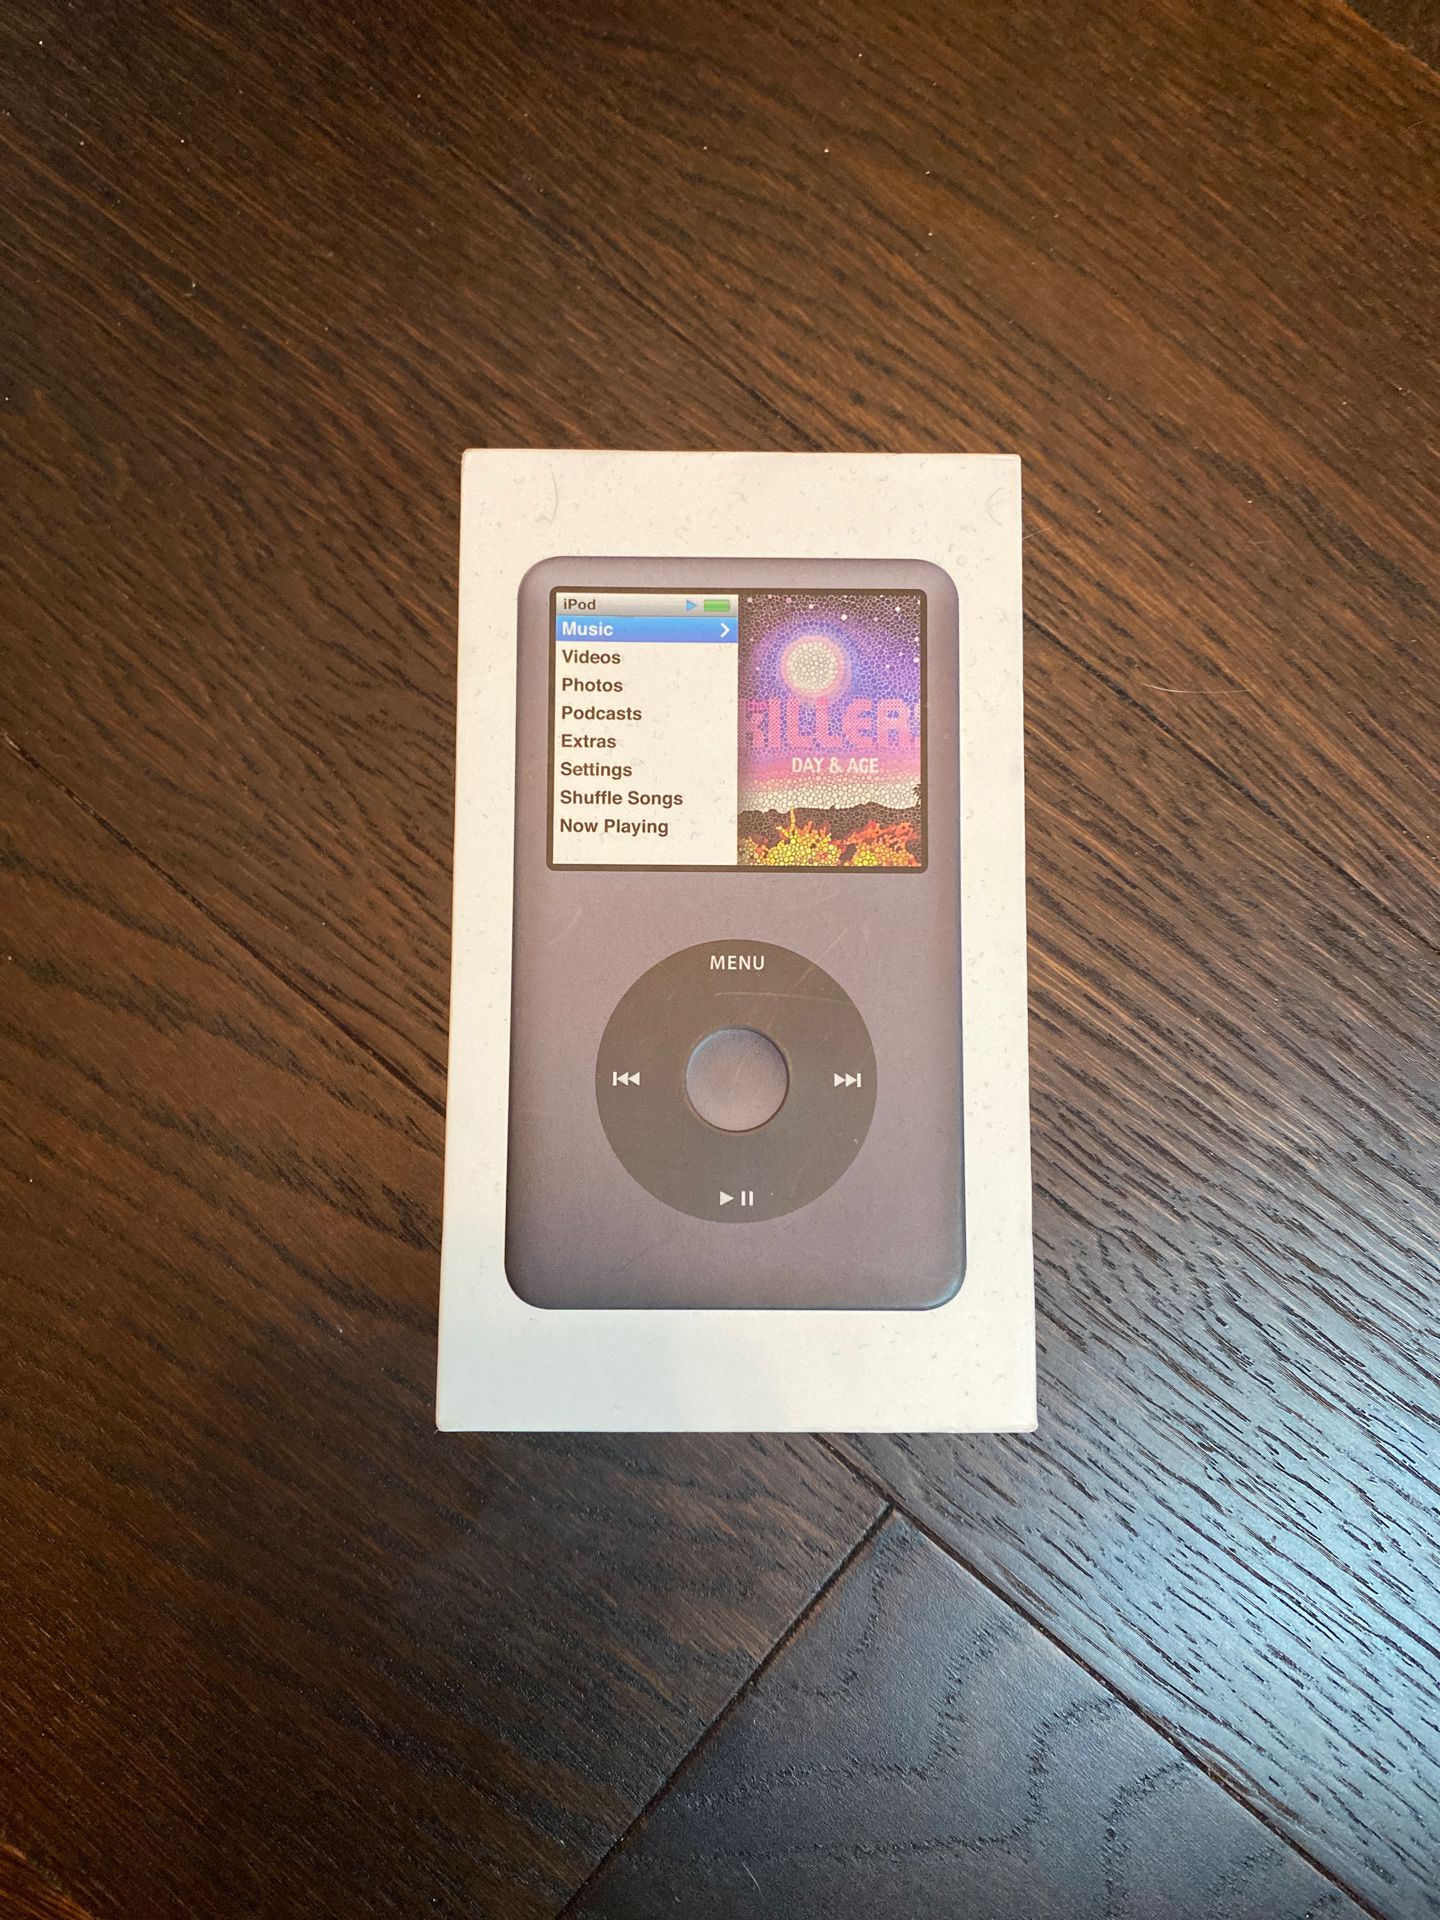 iPod classic 160 GB